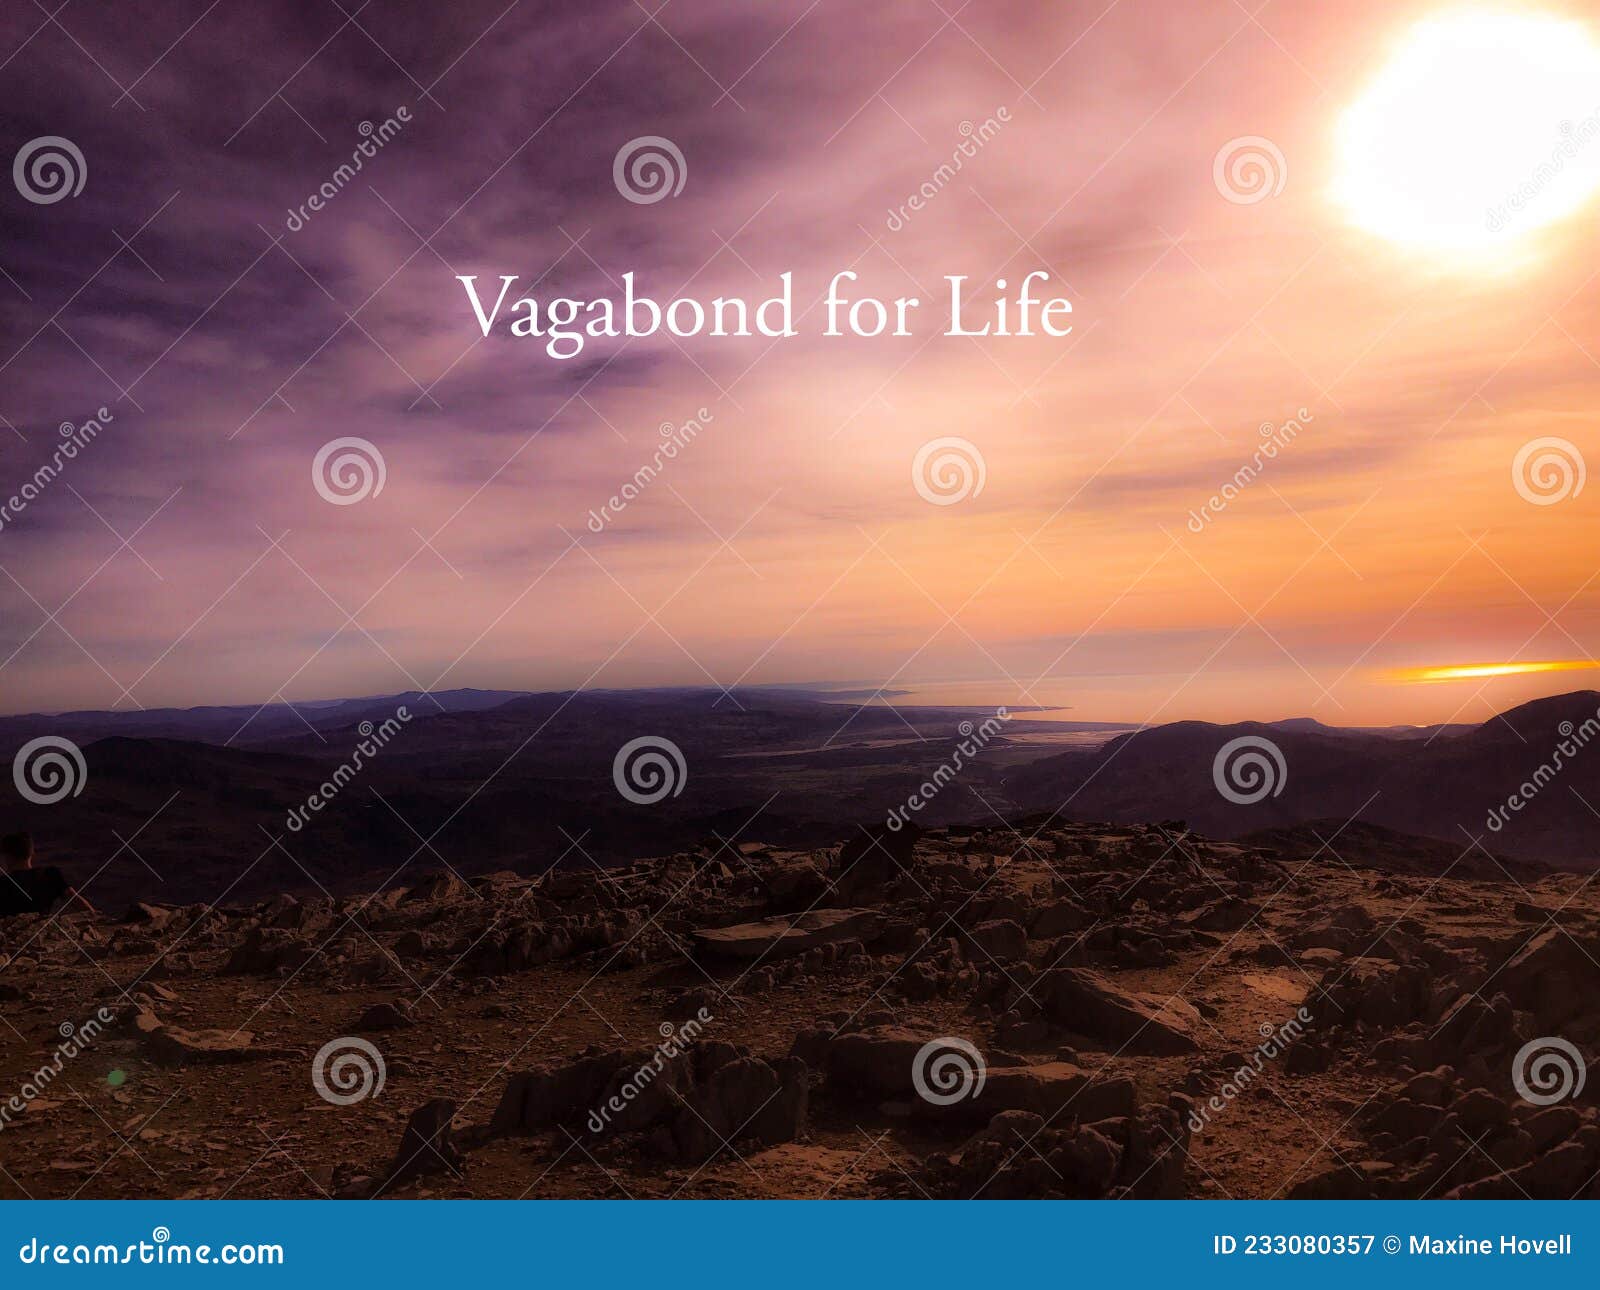 Inspirational Vagabond for Life Stock Image Image of nature, eyes: